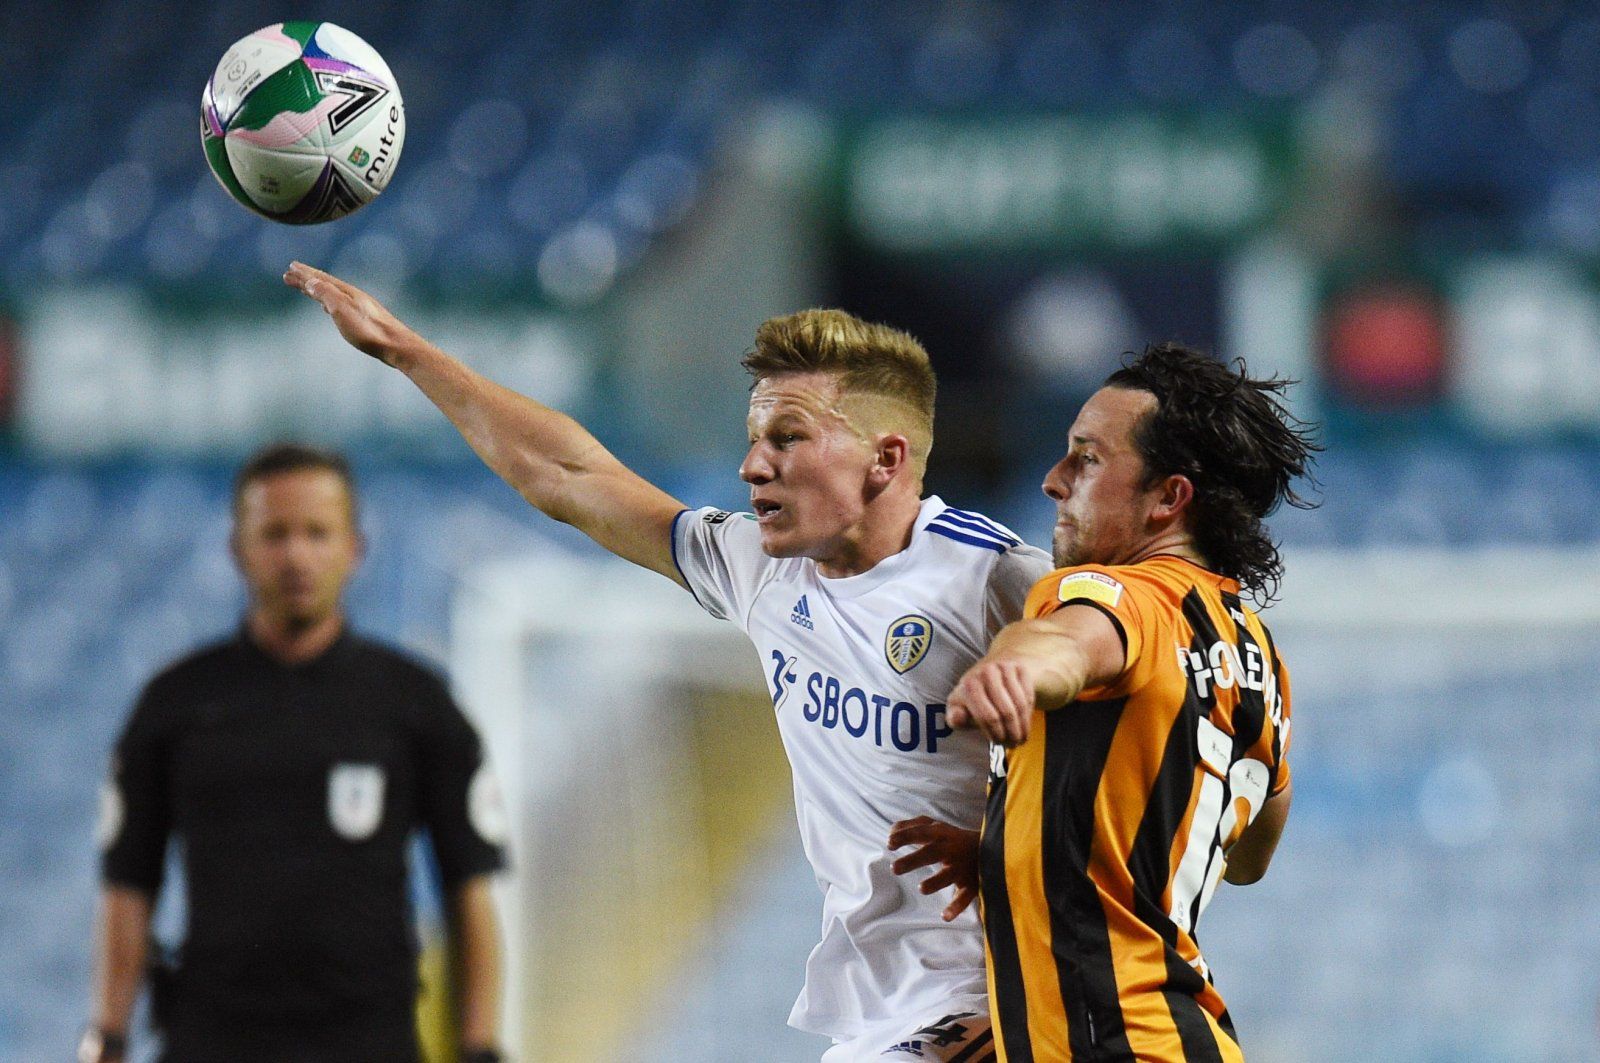 Leeds: Mateusz Bogusz set to re-join UD Ibiza -Leeds United News